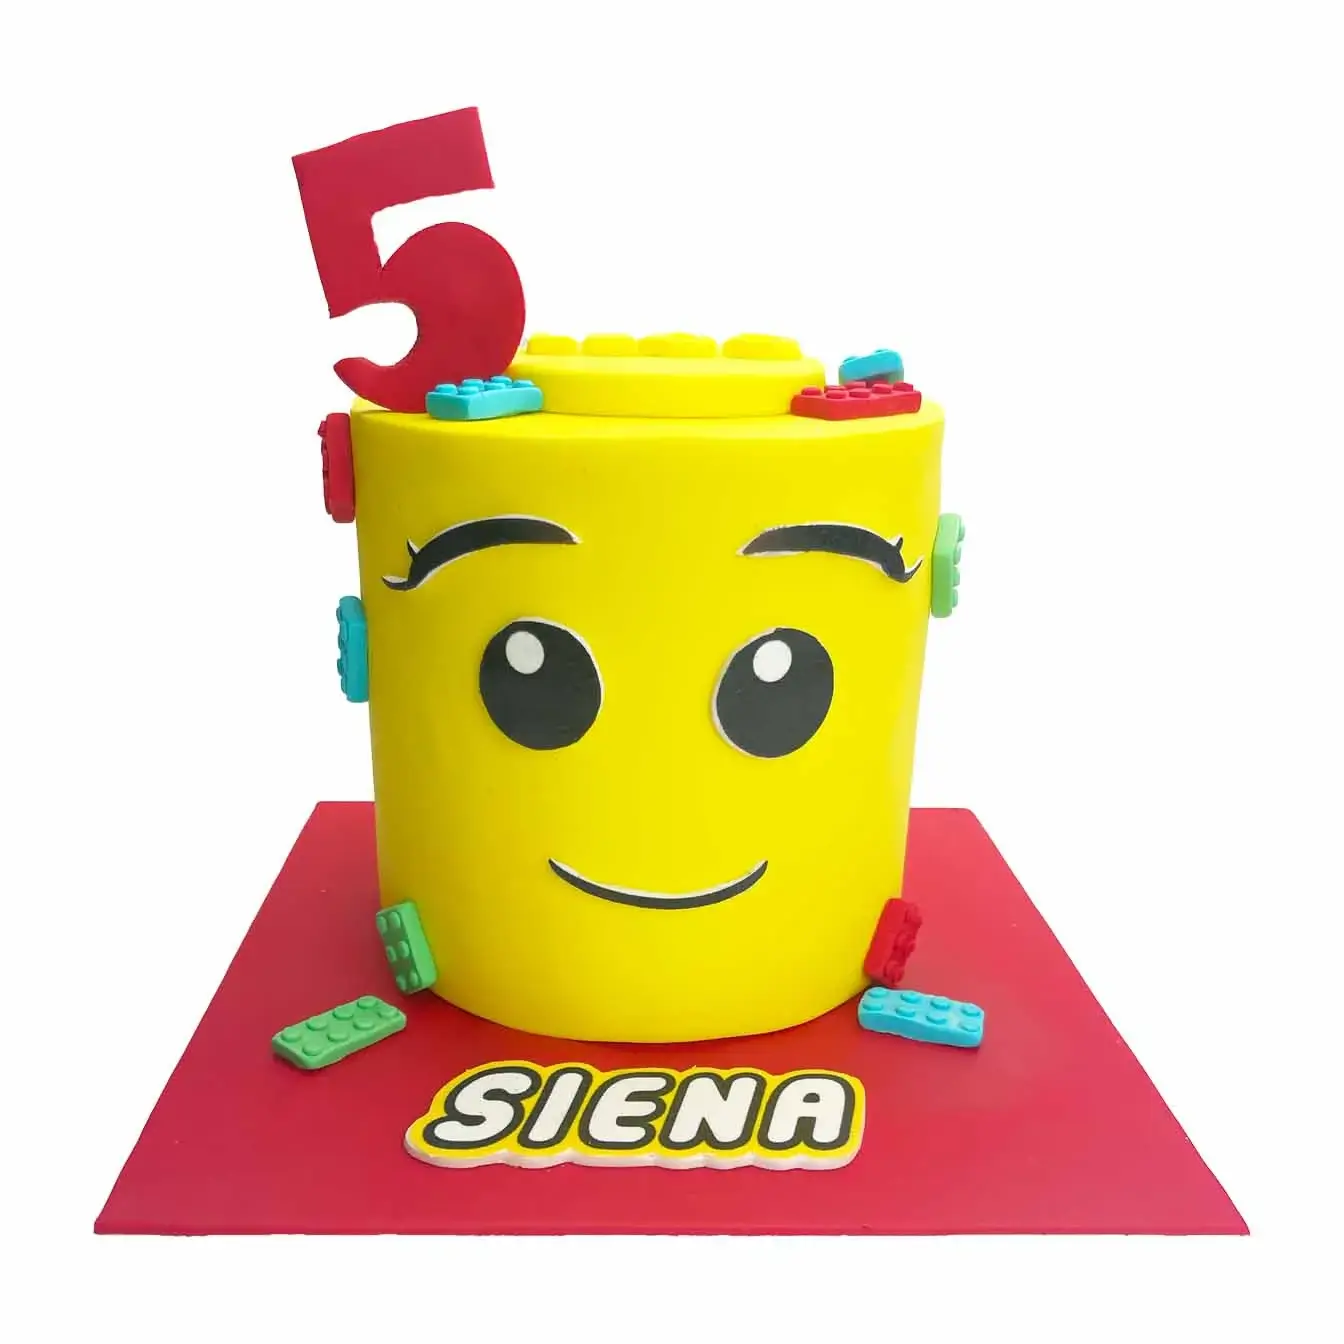 Build-A-Block Lego Head Cake - A delightful girl Lego head with cascading Lego bricks, a playful centerpiece for Lego enthusiasts.